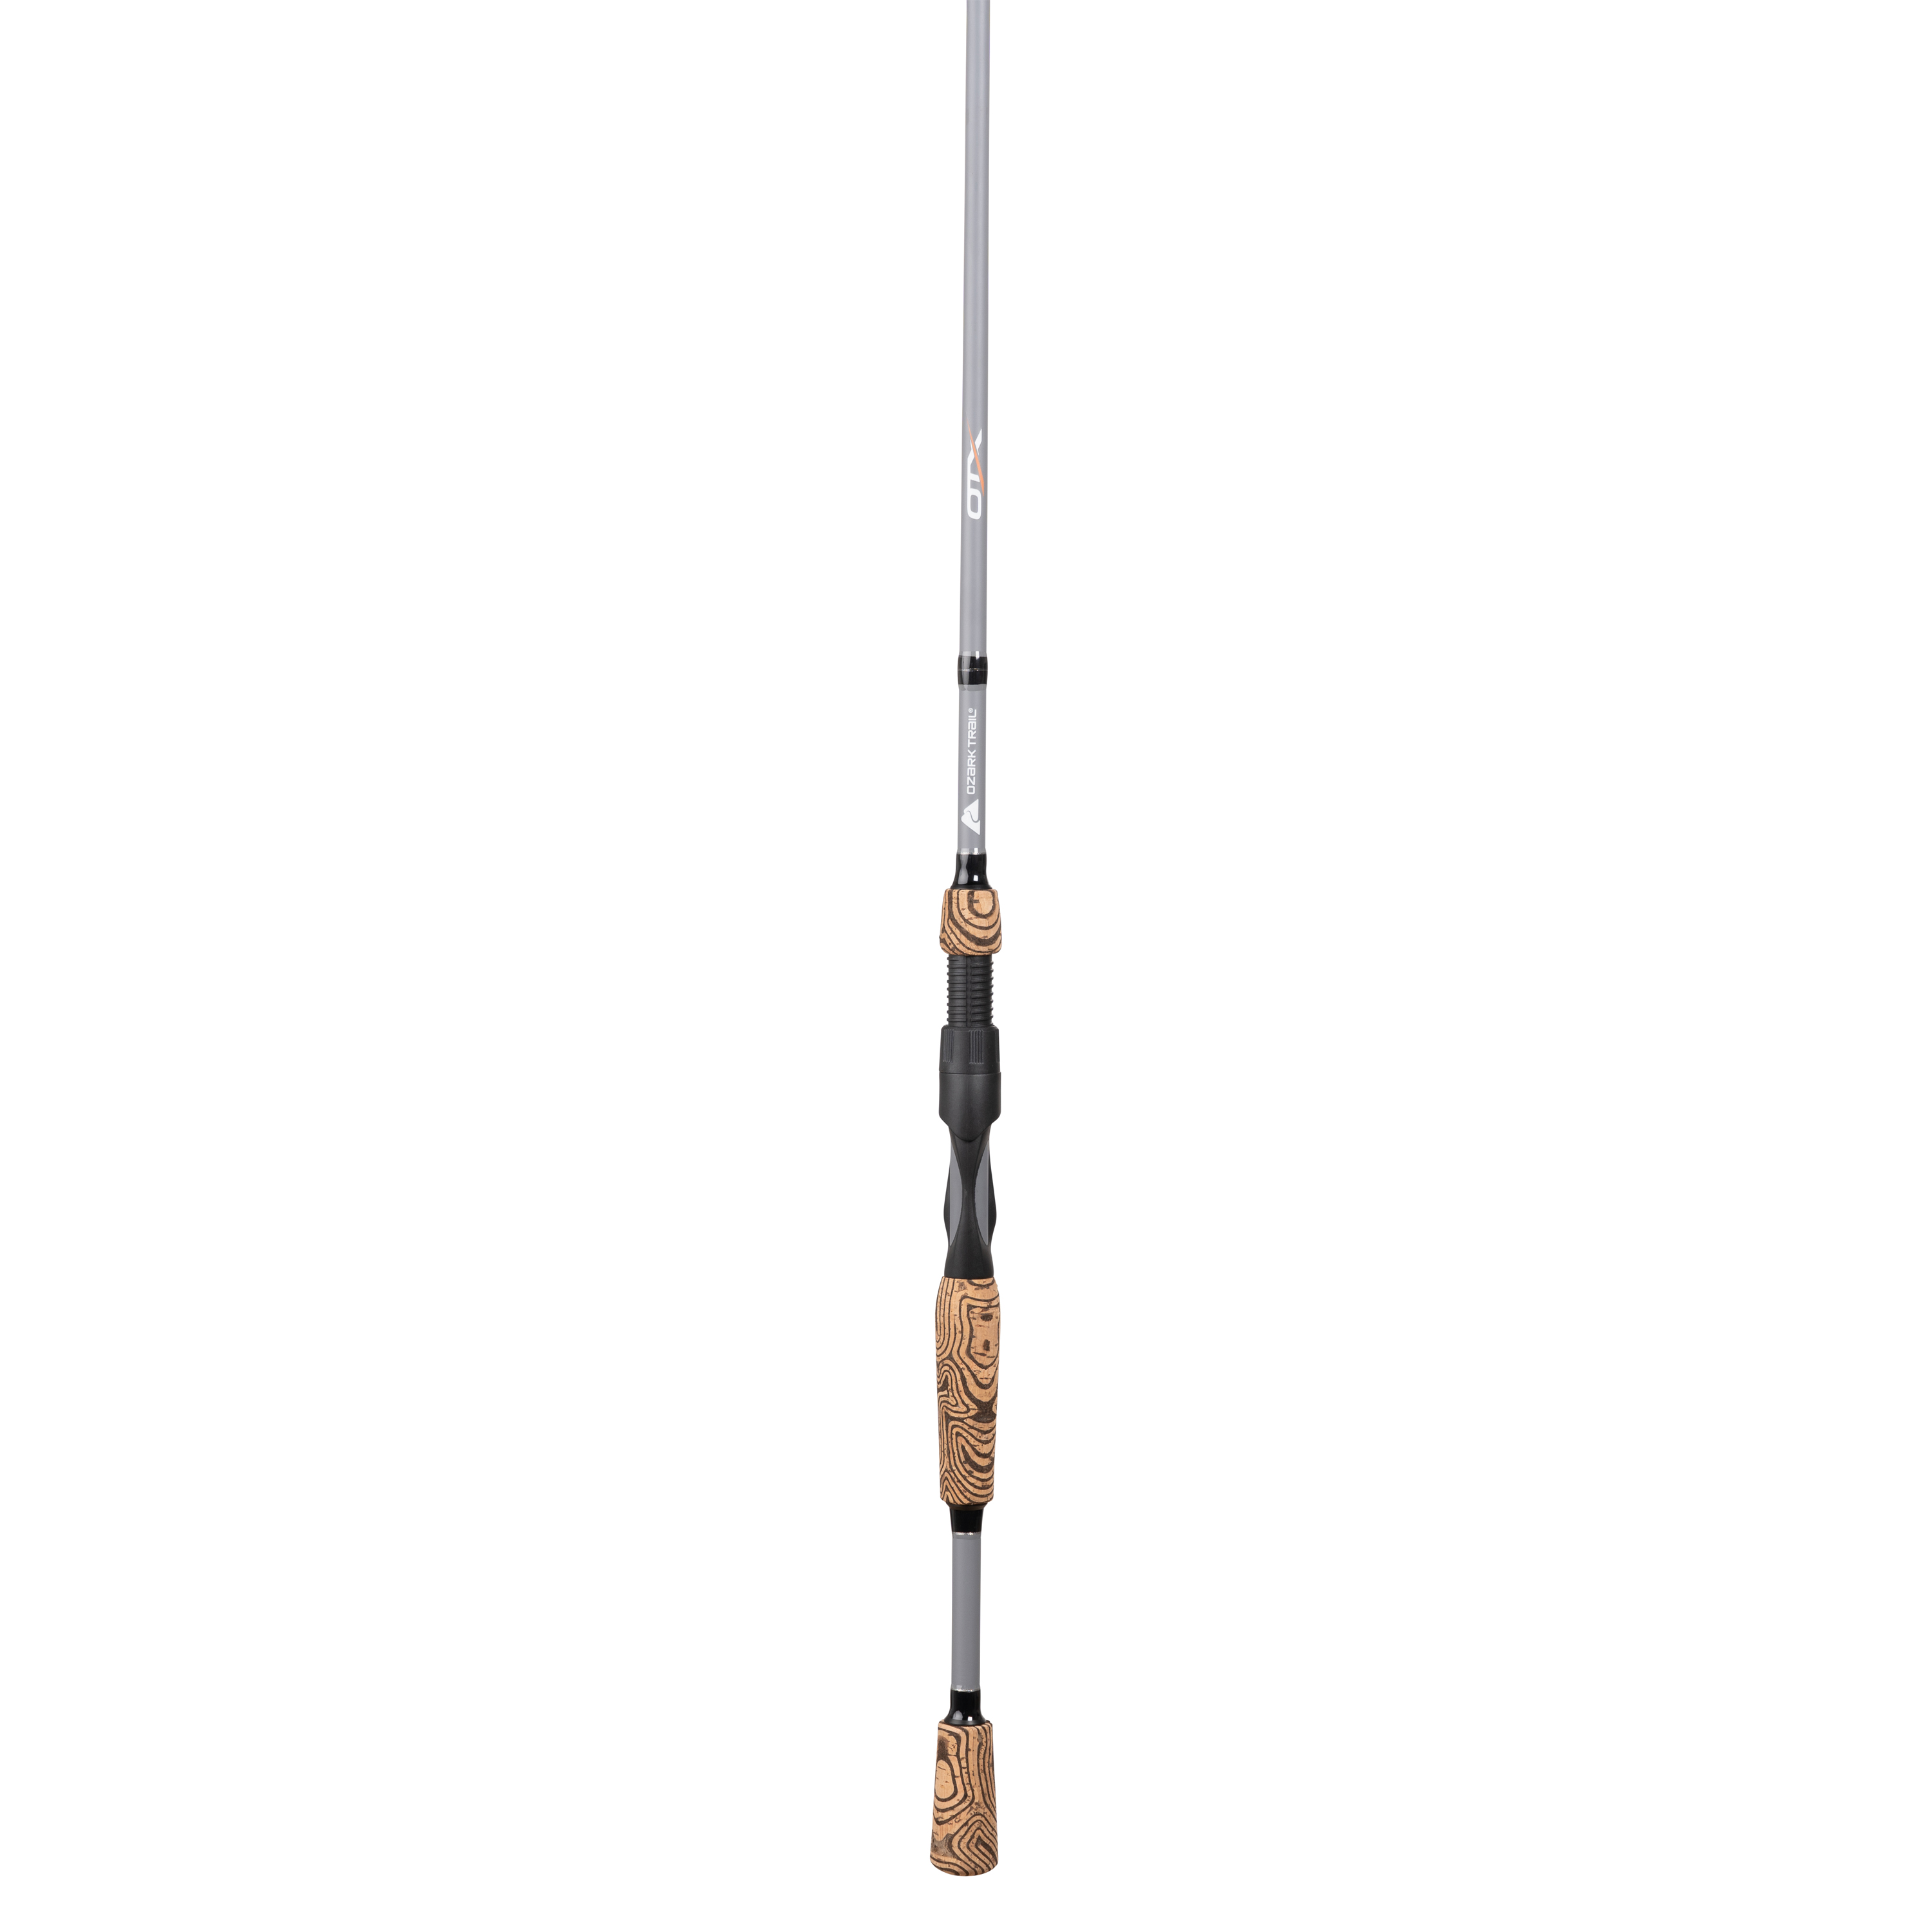 Ozark Trail OTX Spinning Fishing Rod, Medium Action, 7ft - image 3 of 6